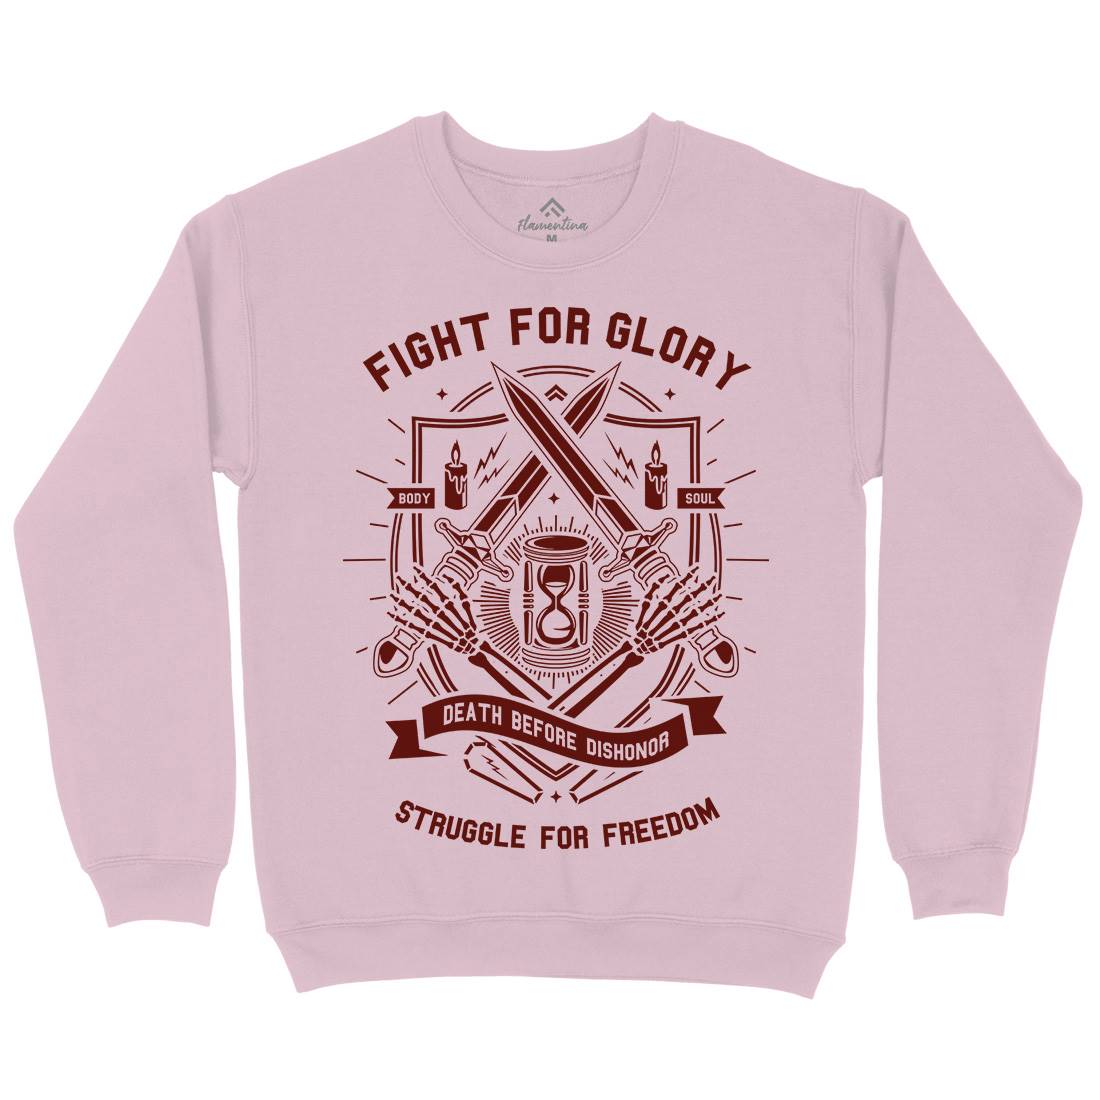 Fight For Glory Kids Crew Neck Sweatshirt Army A228